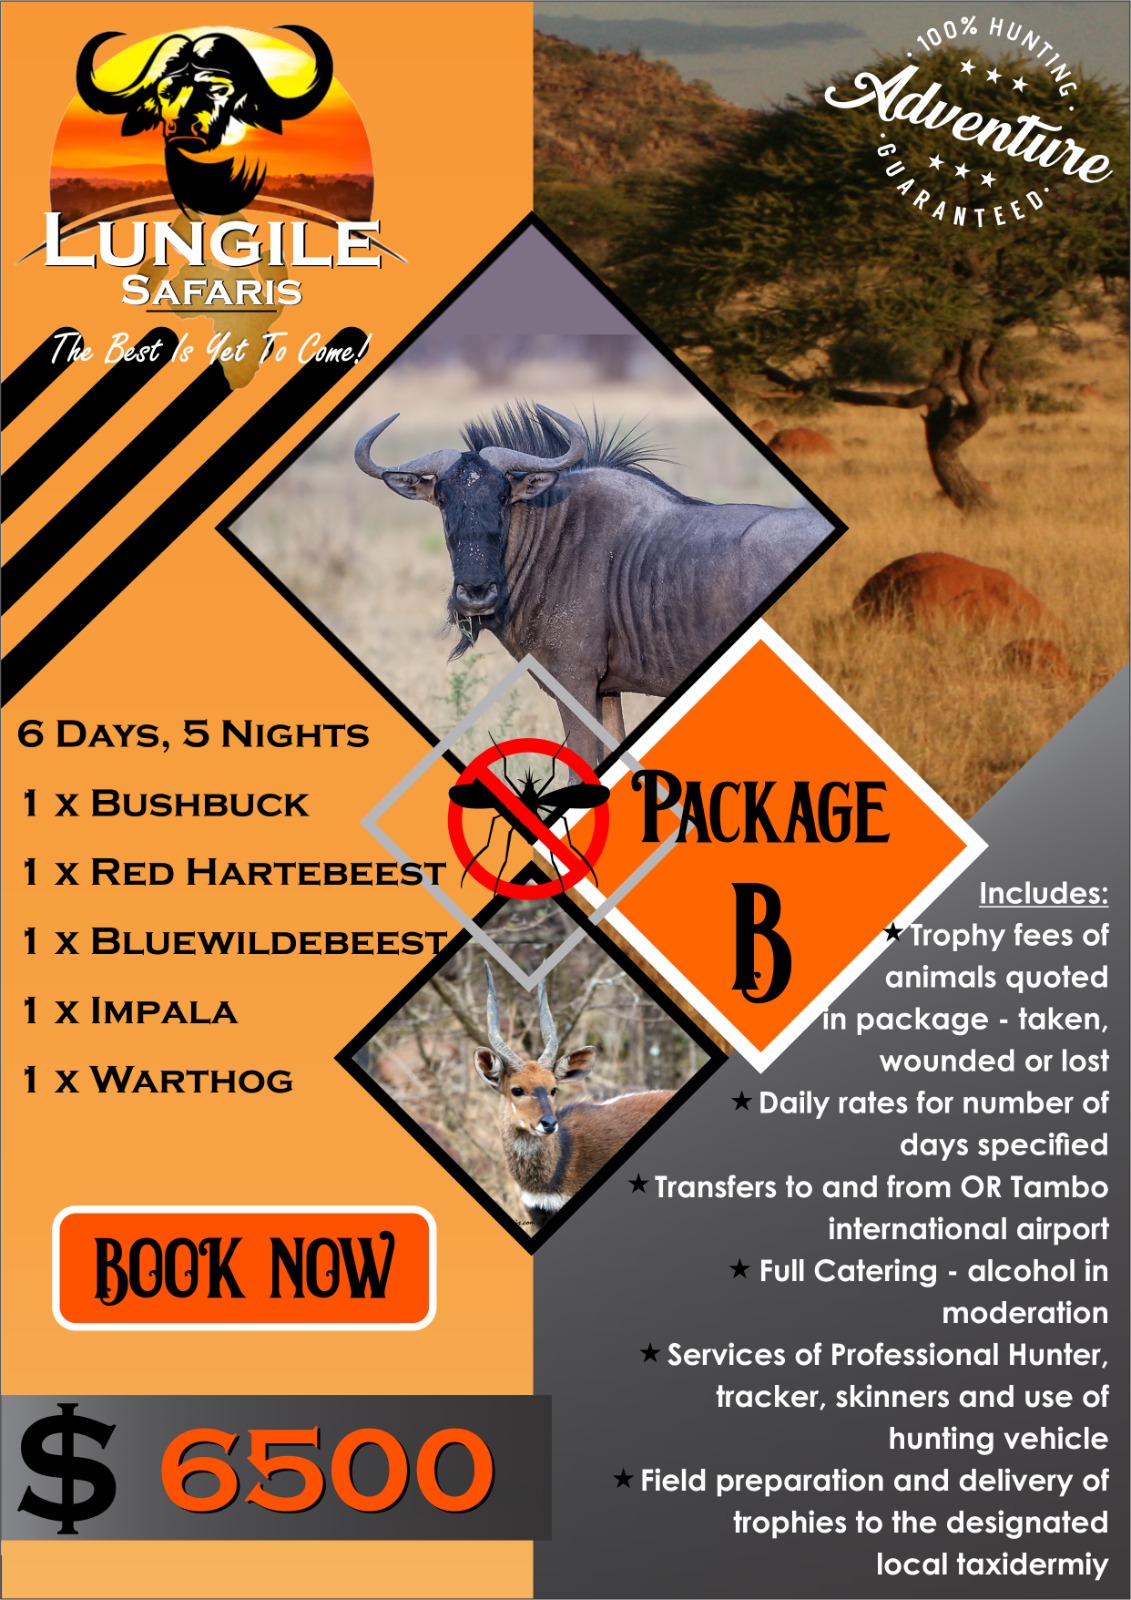 Lungile Safaris Package B